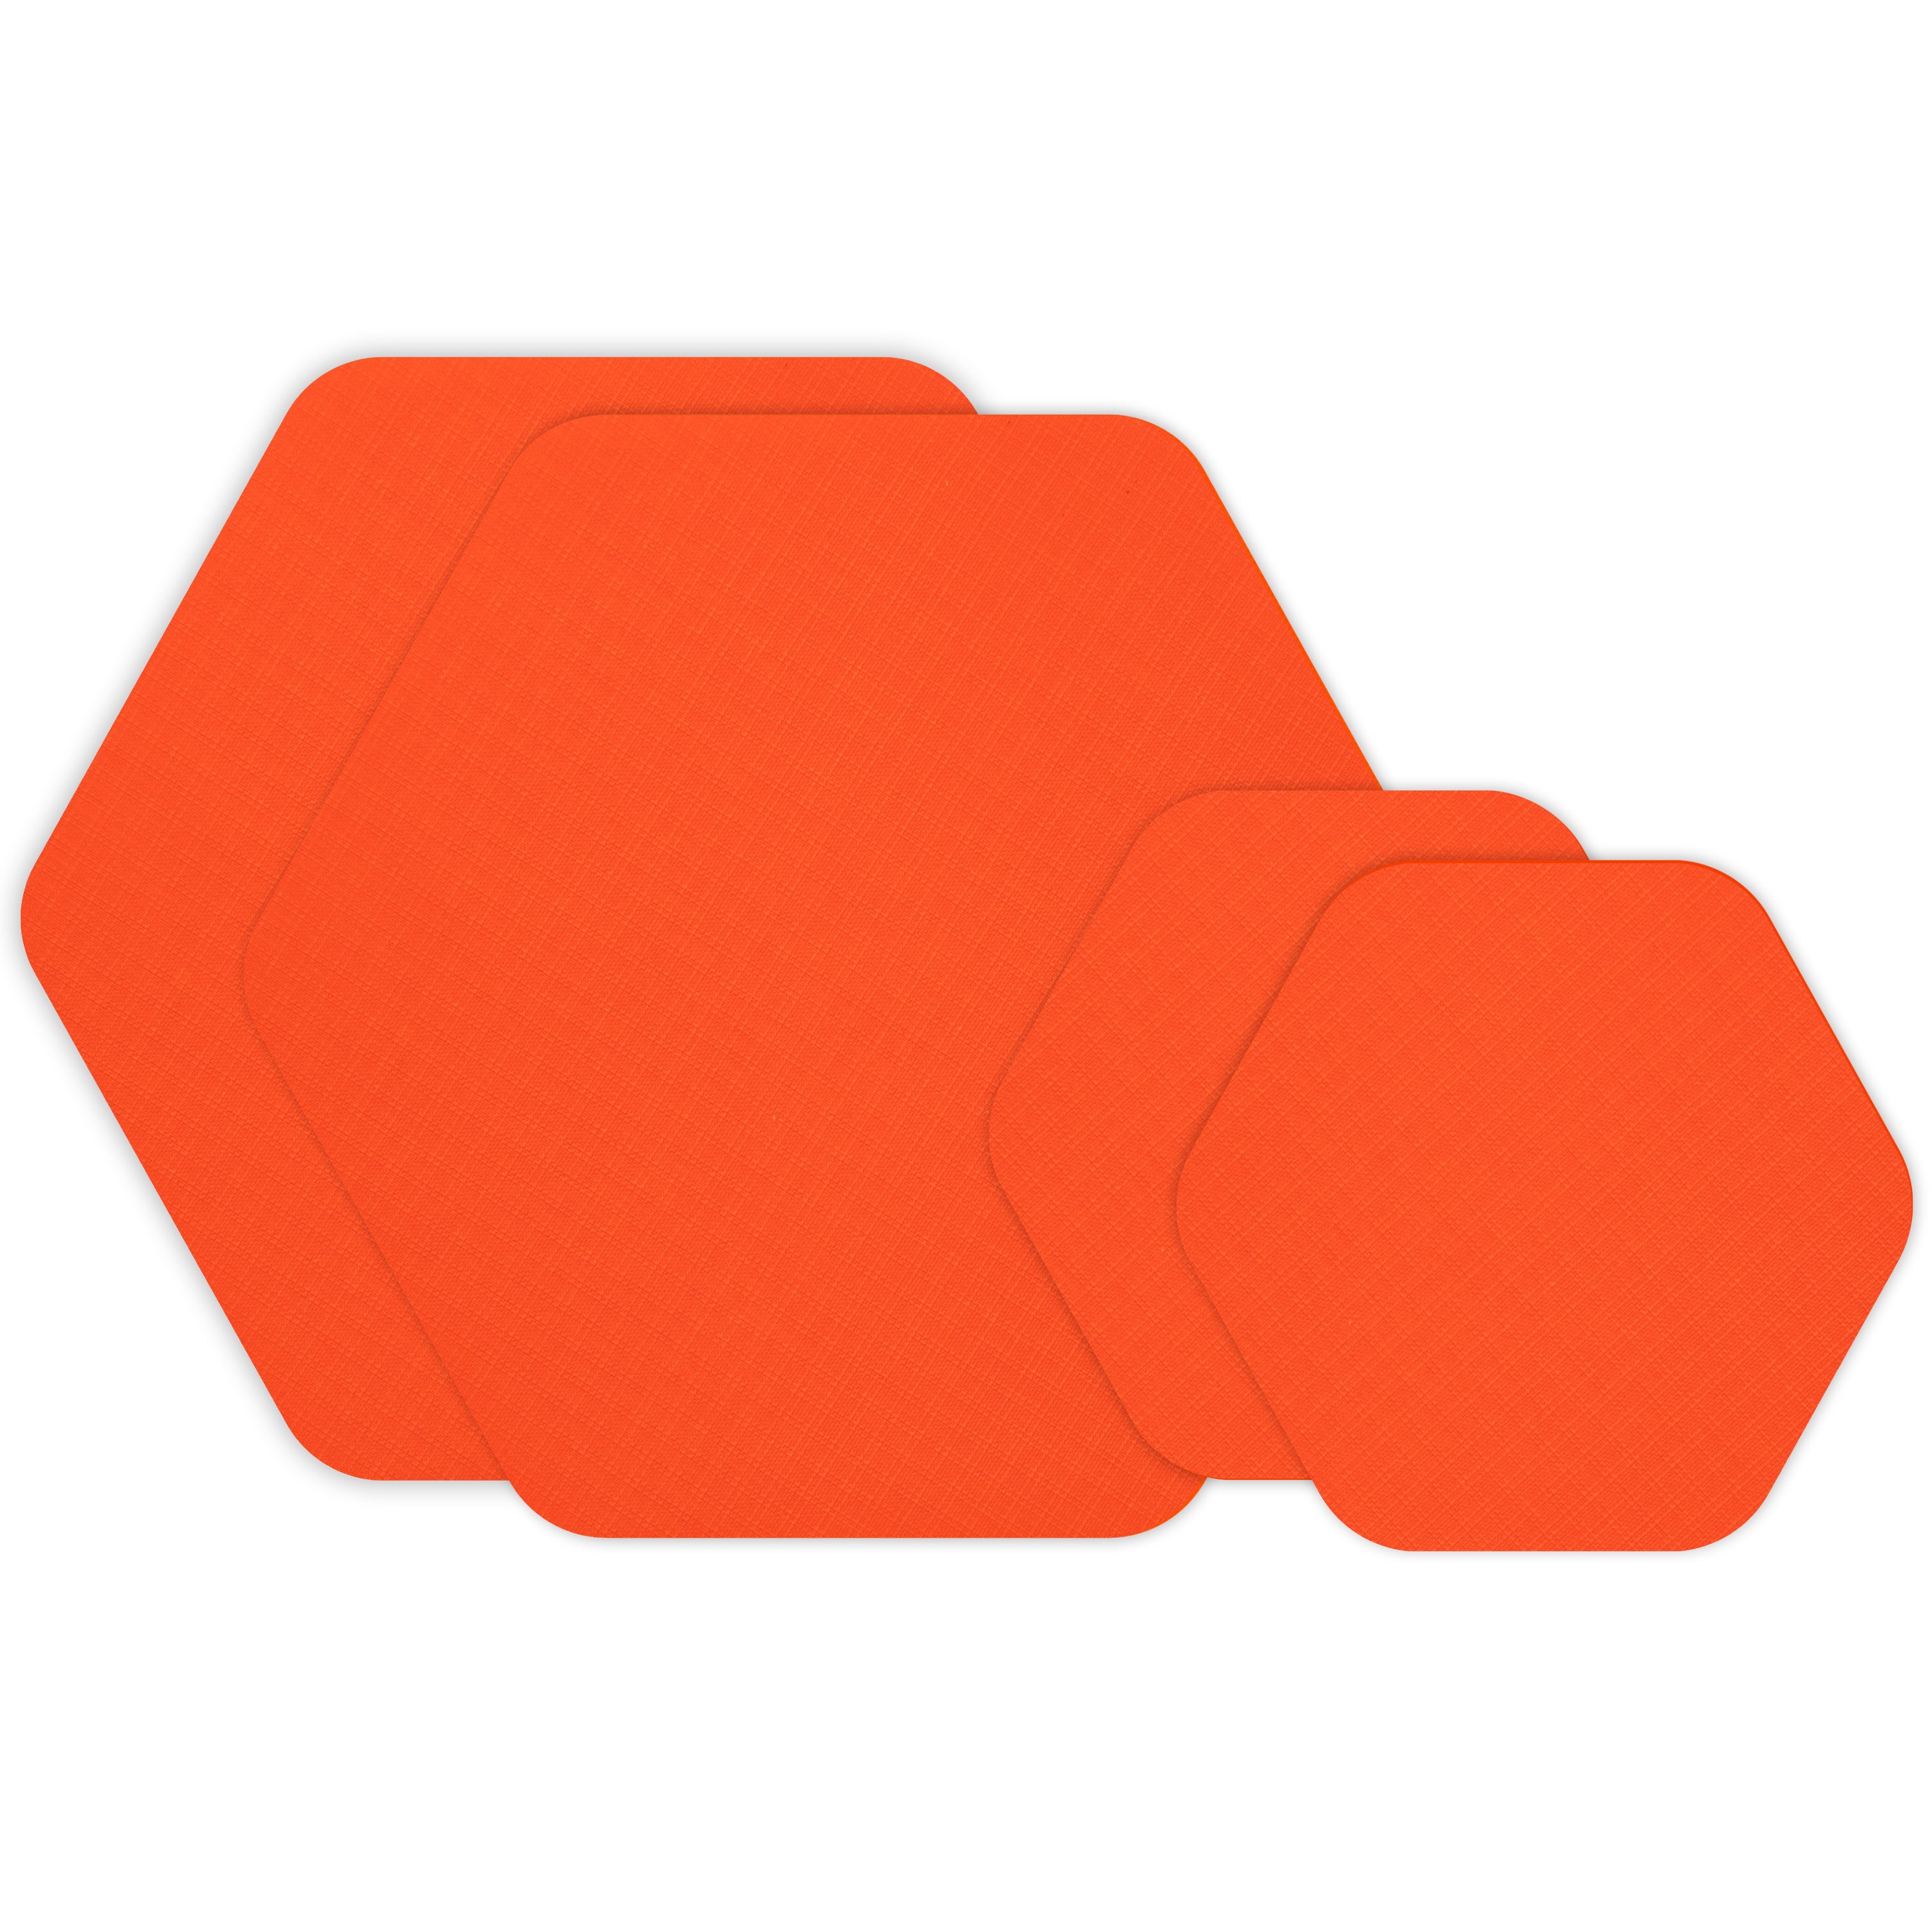 Tenacious Tape Repair Patches - Orange - Ramsey Outdoor